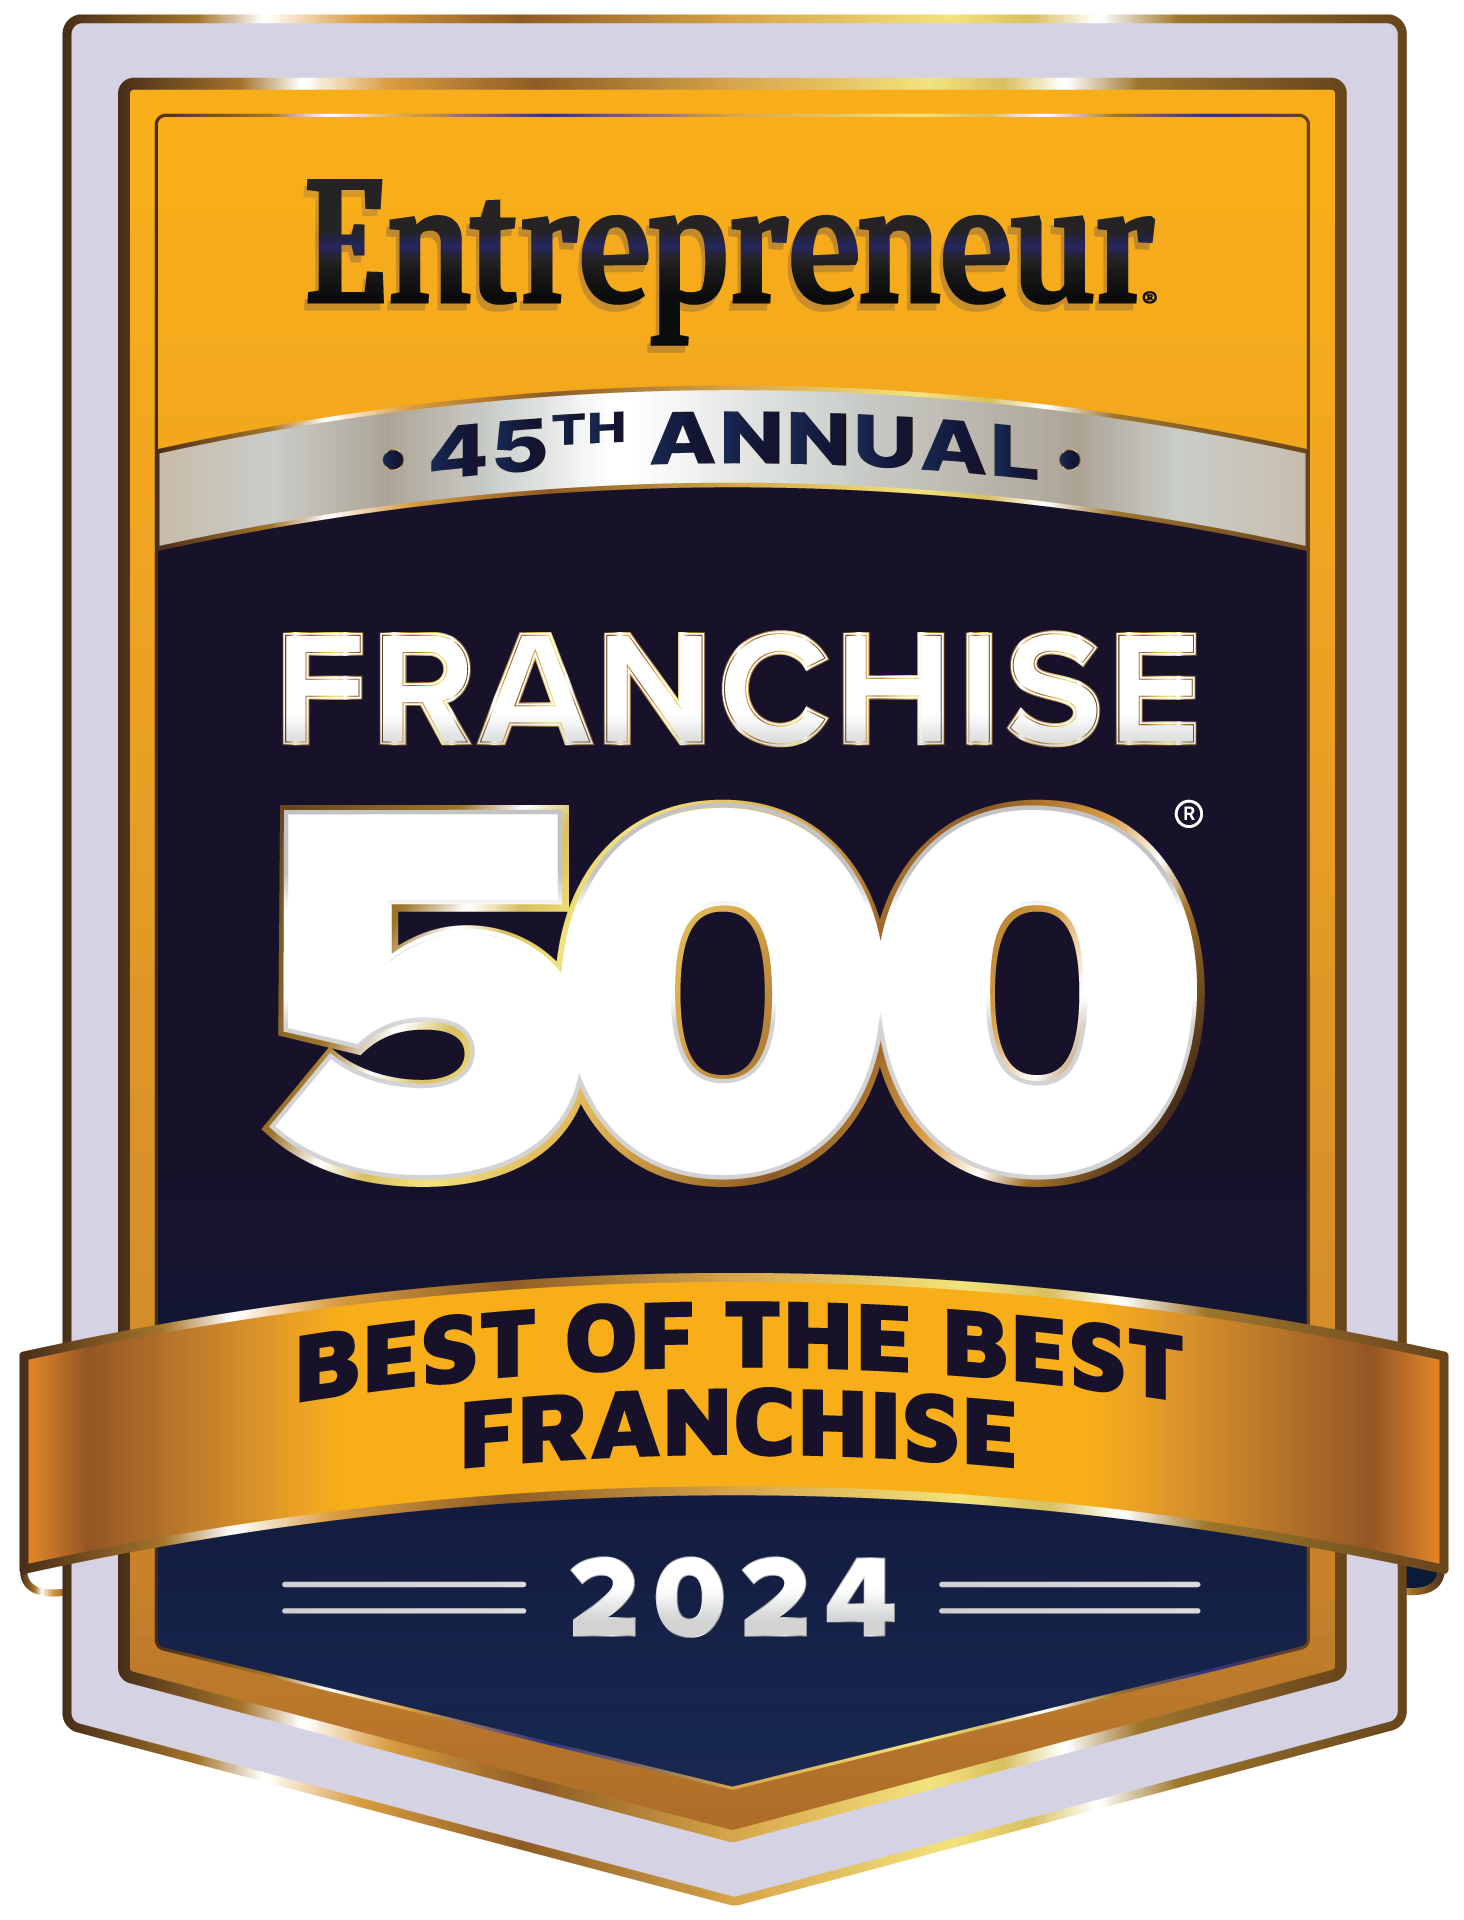 Entrepreneur Magazine Franchise 500 Top New Franchises 2024